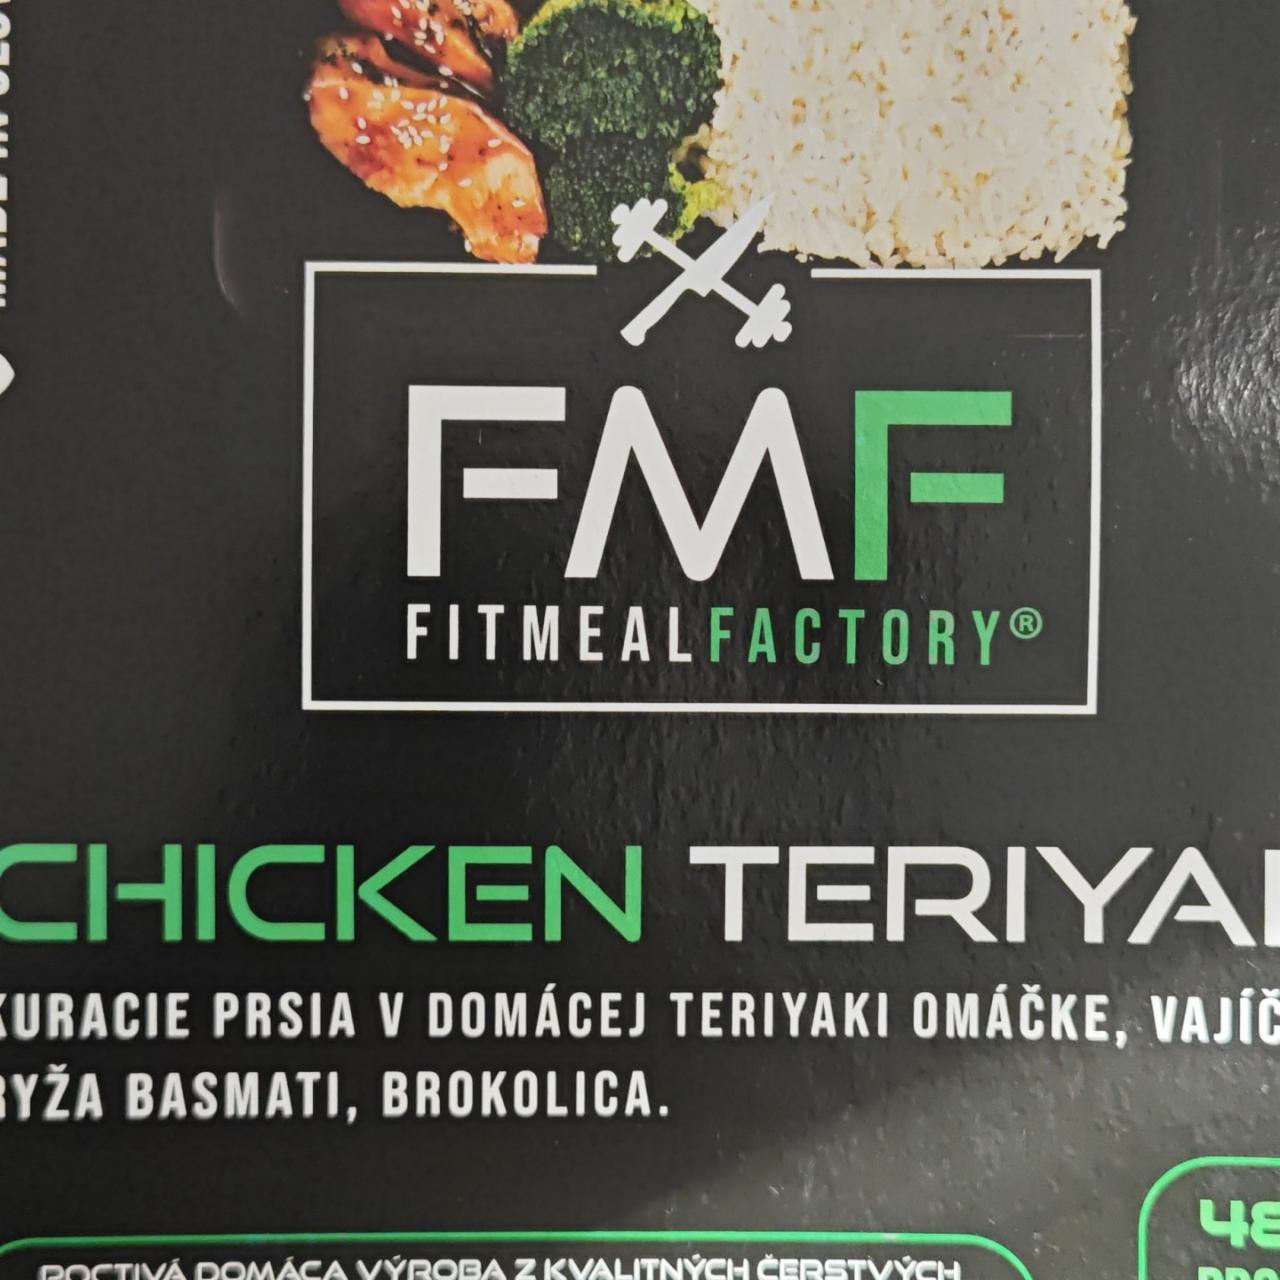 Fotografie - Fit Meal Factory Chicken Teriyaki FMF